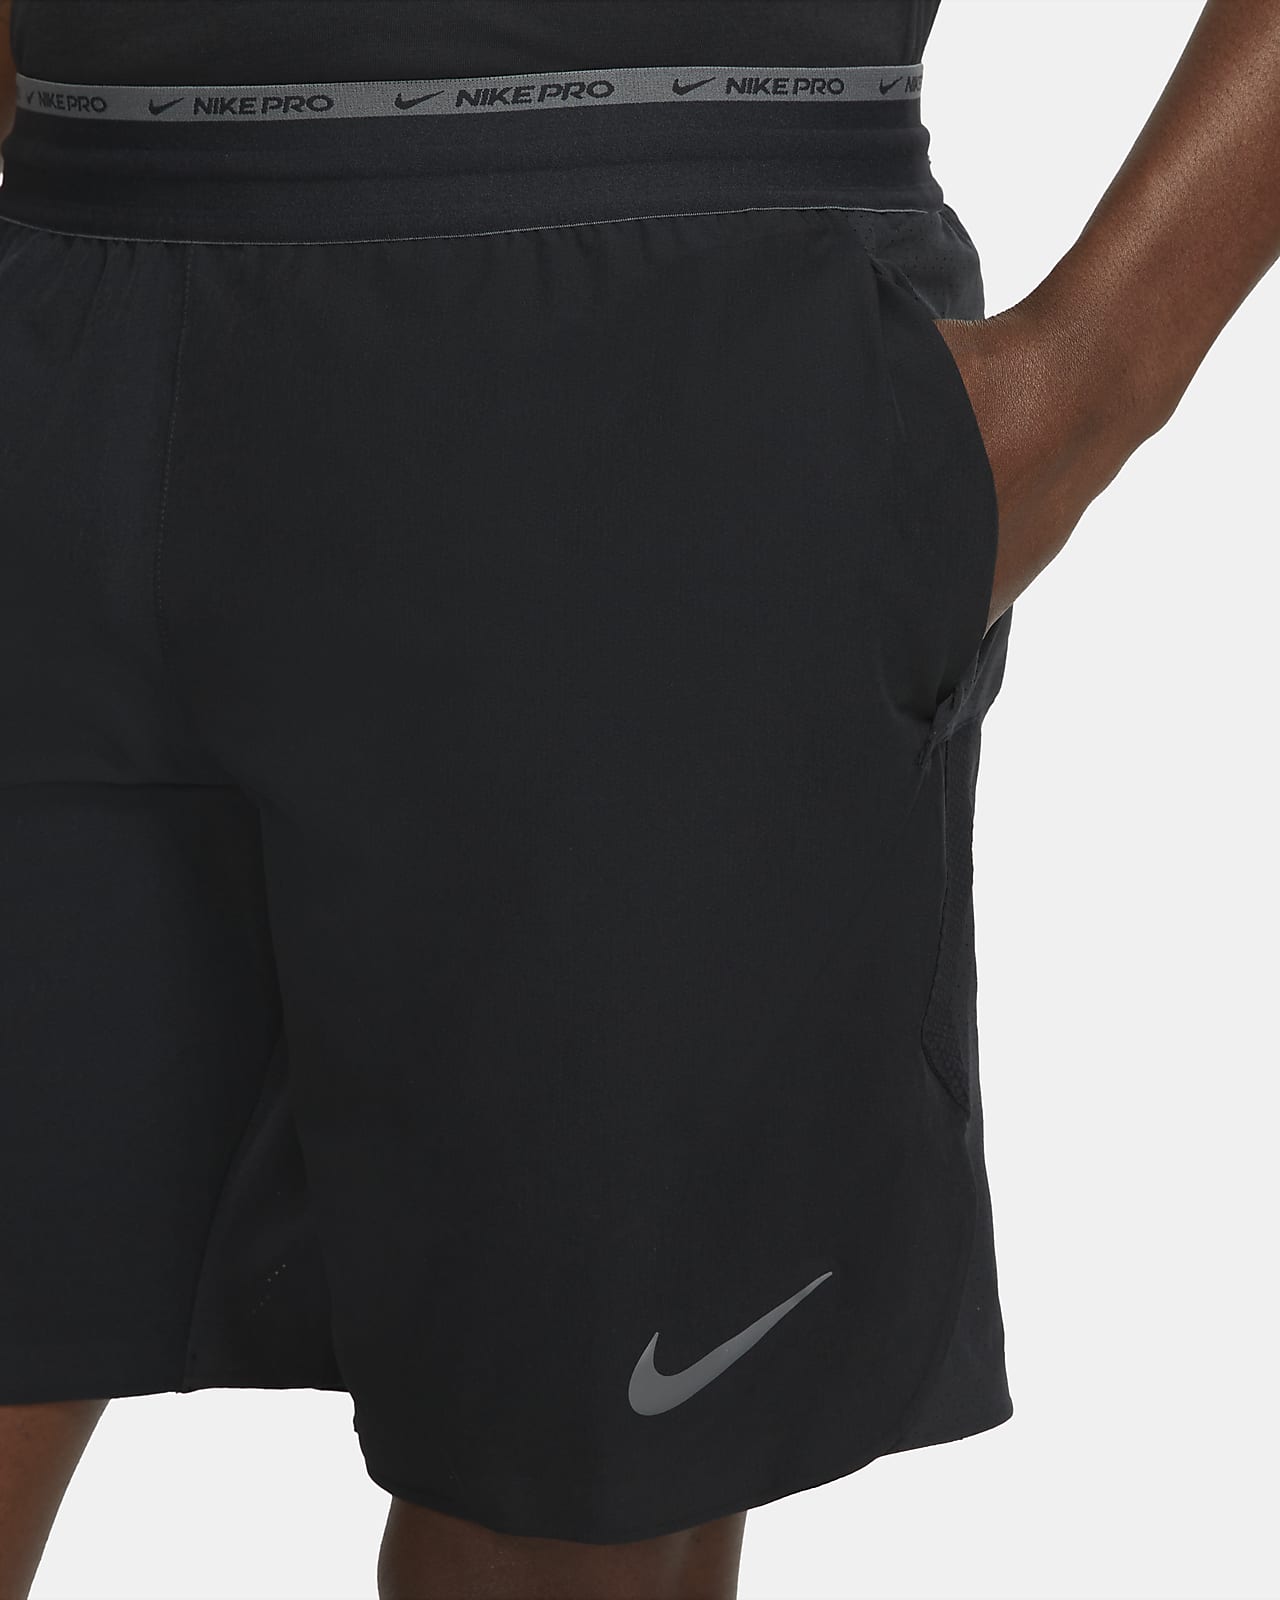 Dri-FIT Flex Rep Pro Collection Men's Unlined Training Nike .com